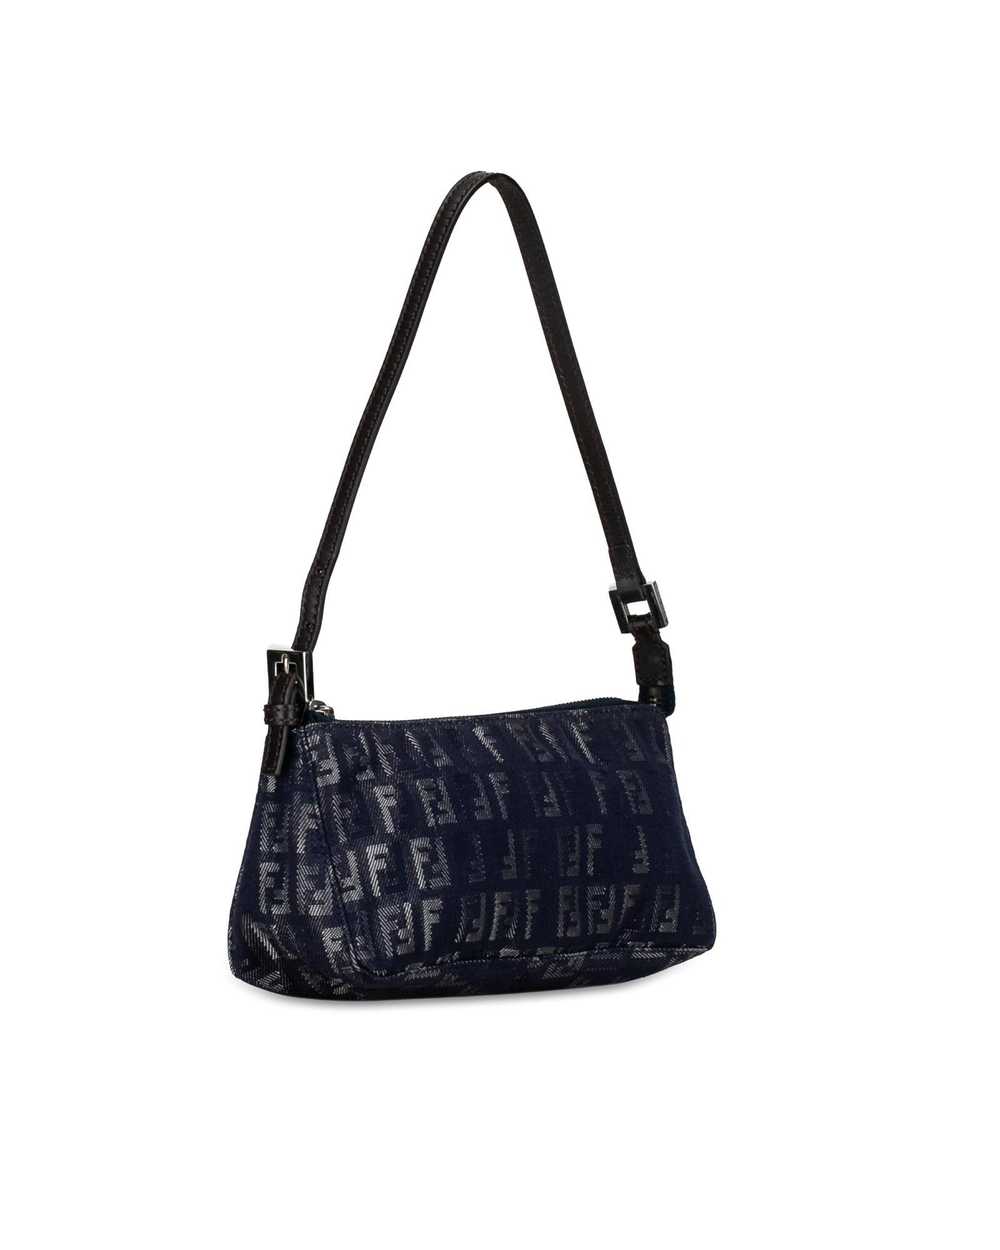 Fendi Denim Shoulder Bag with Top Zip Closure - image 2